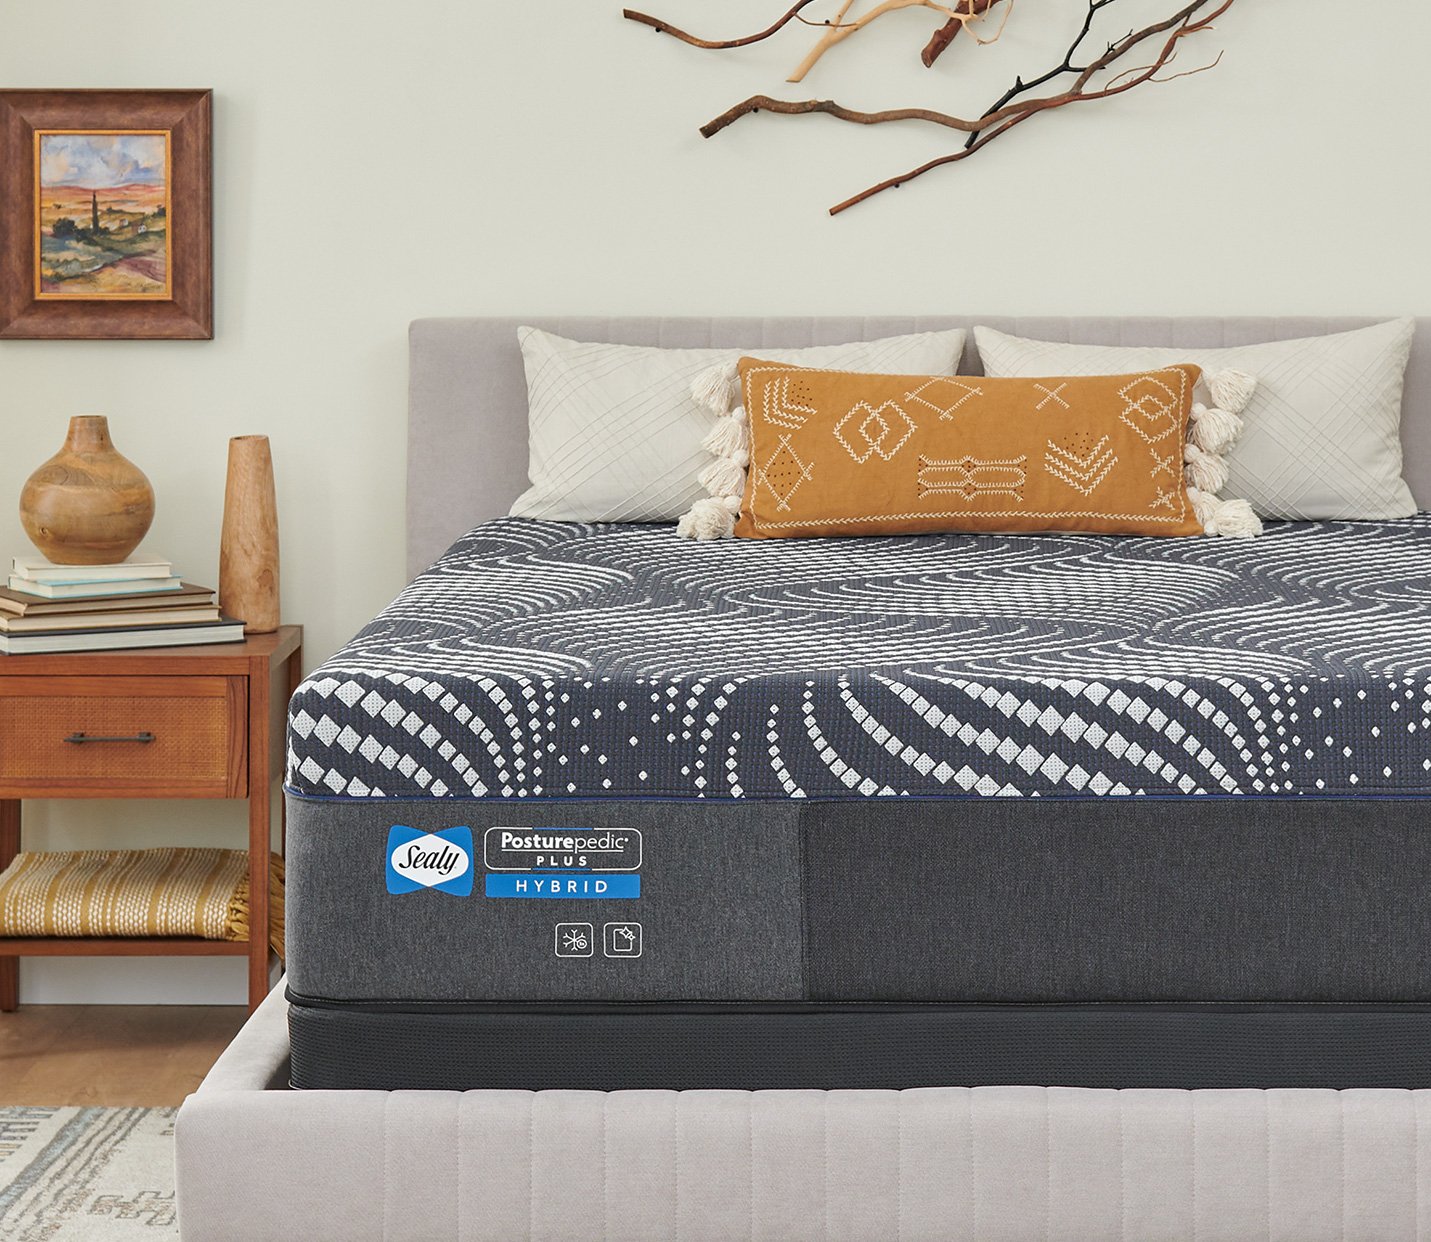 Sealy Hybrid Posturepedic<sup>®</sup> bed in styled bedroom